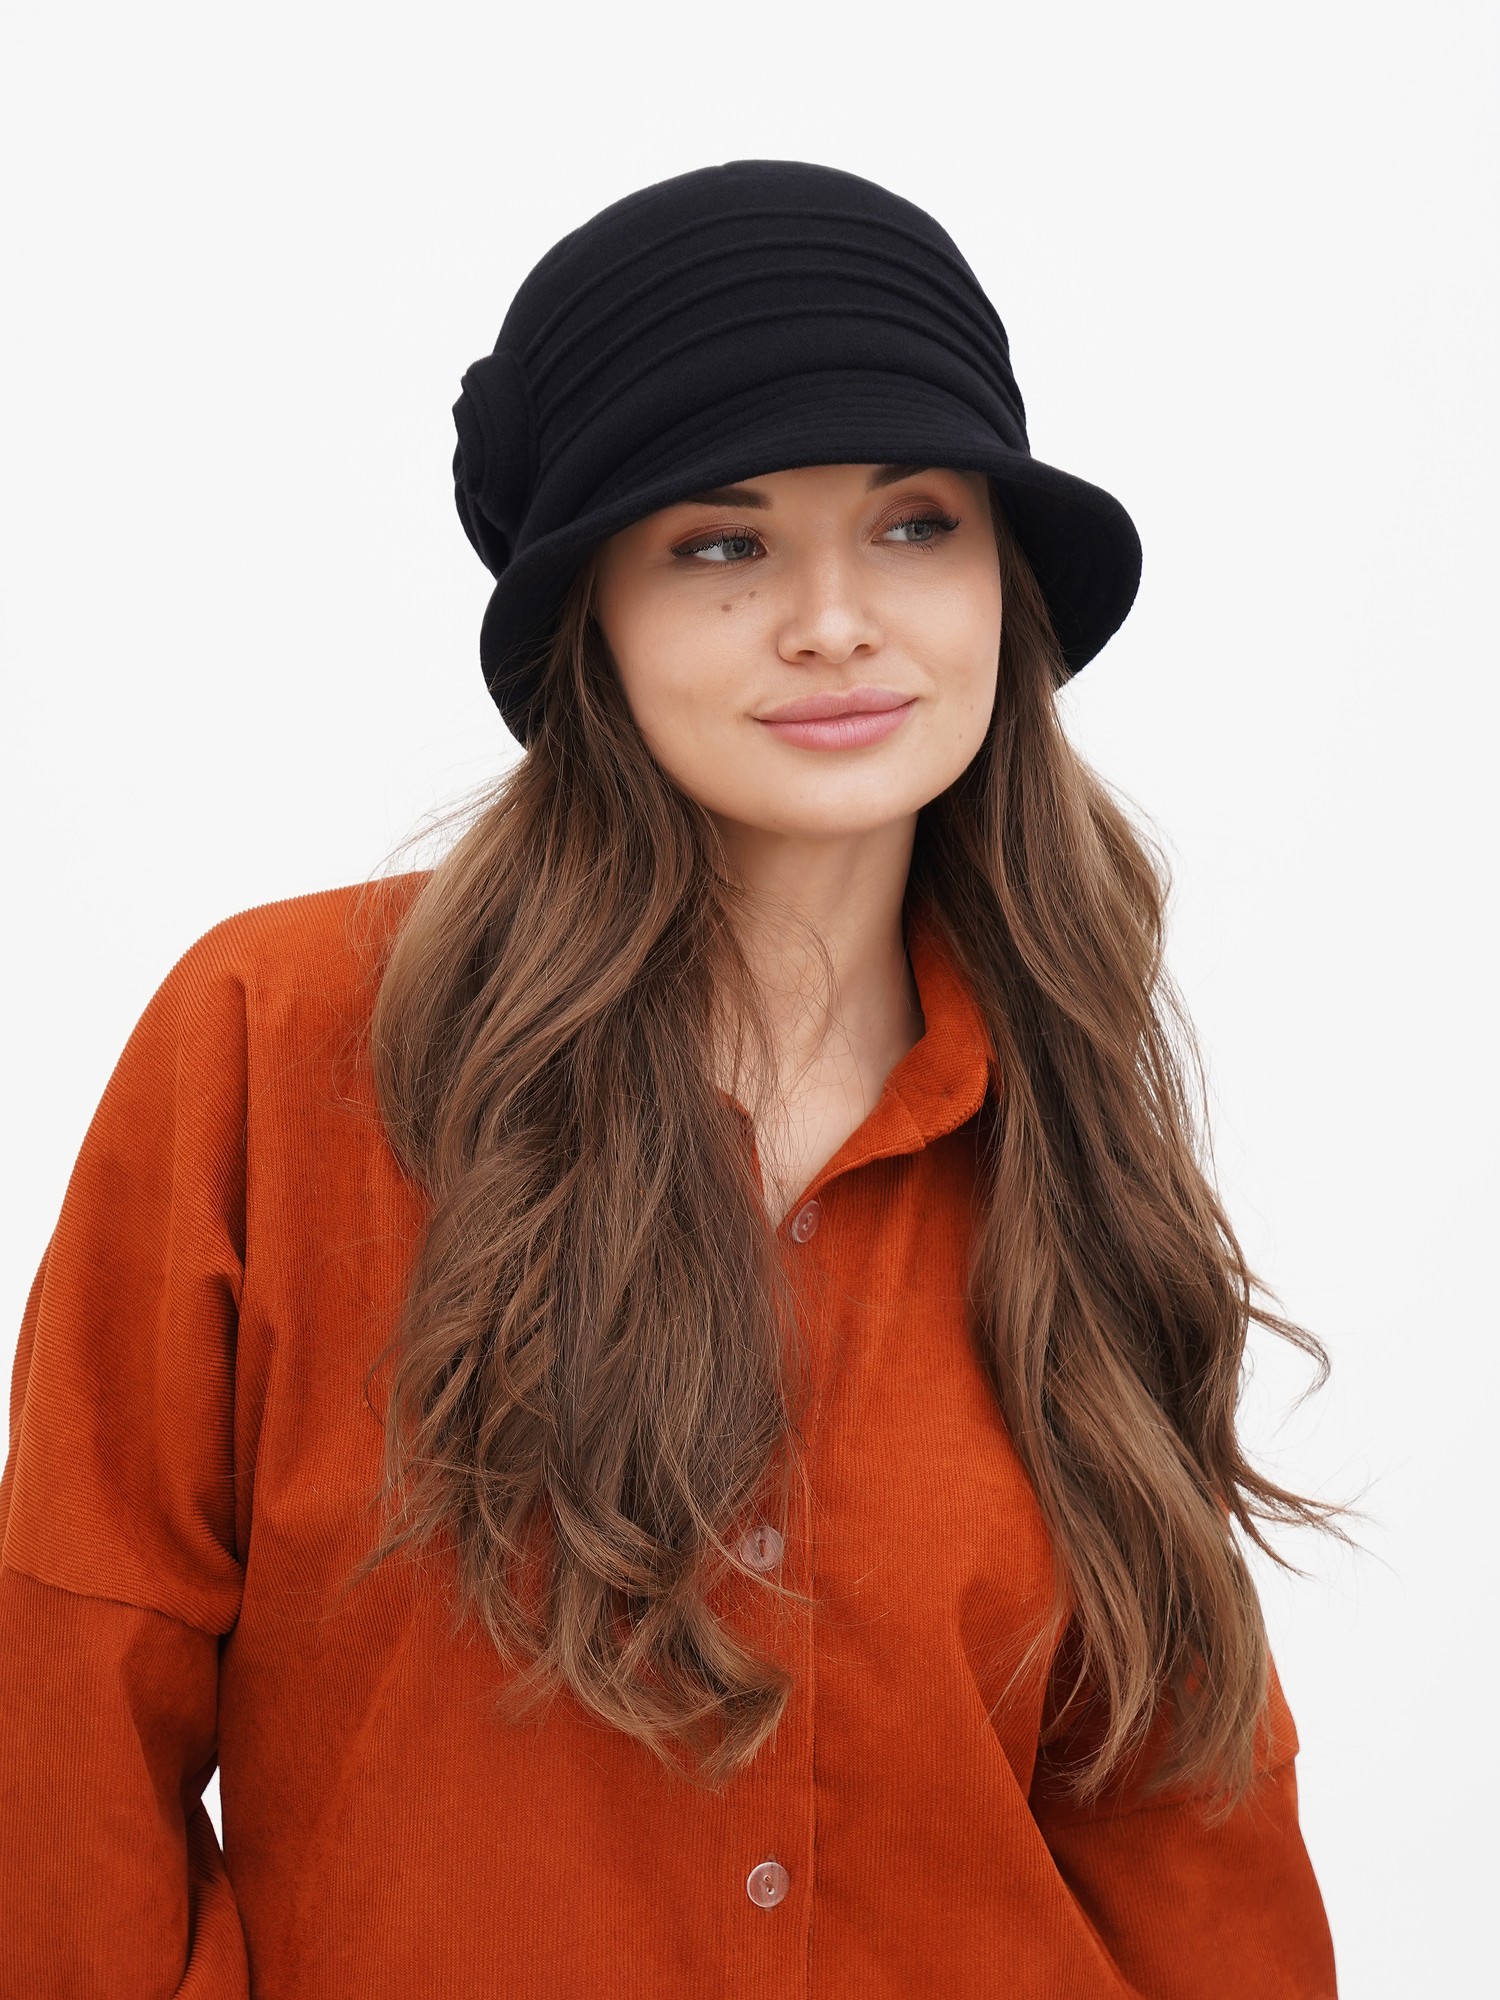 Women's hat cloche made of cashmere black